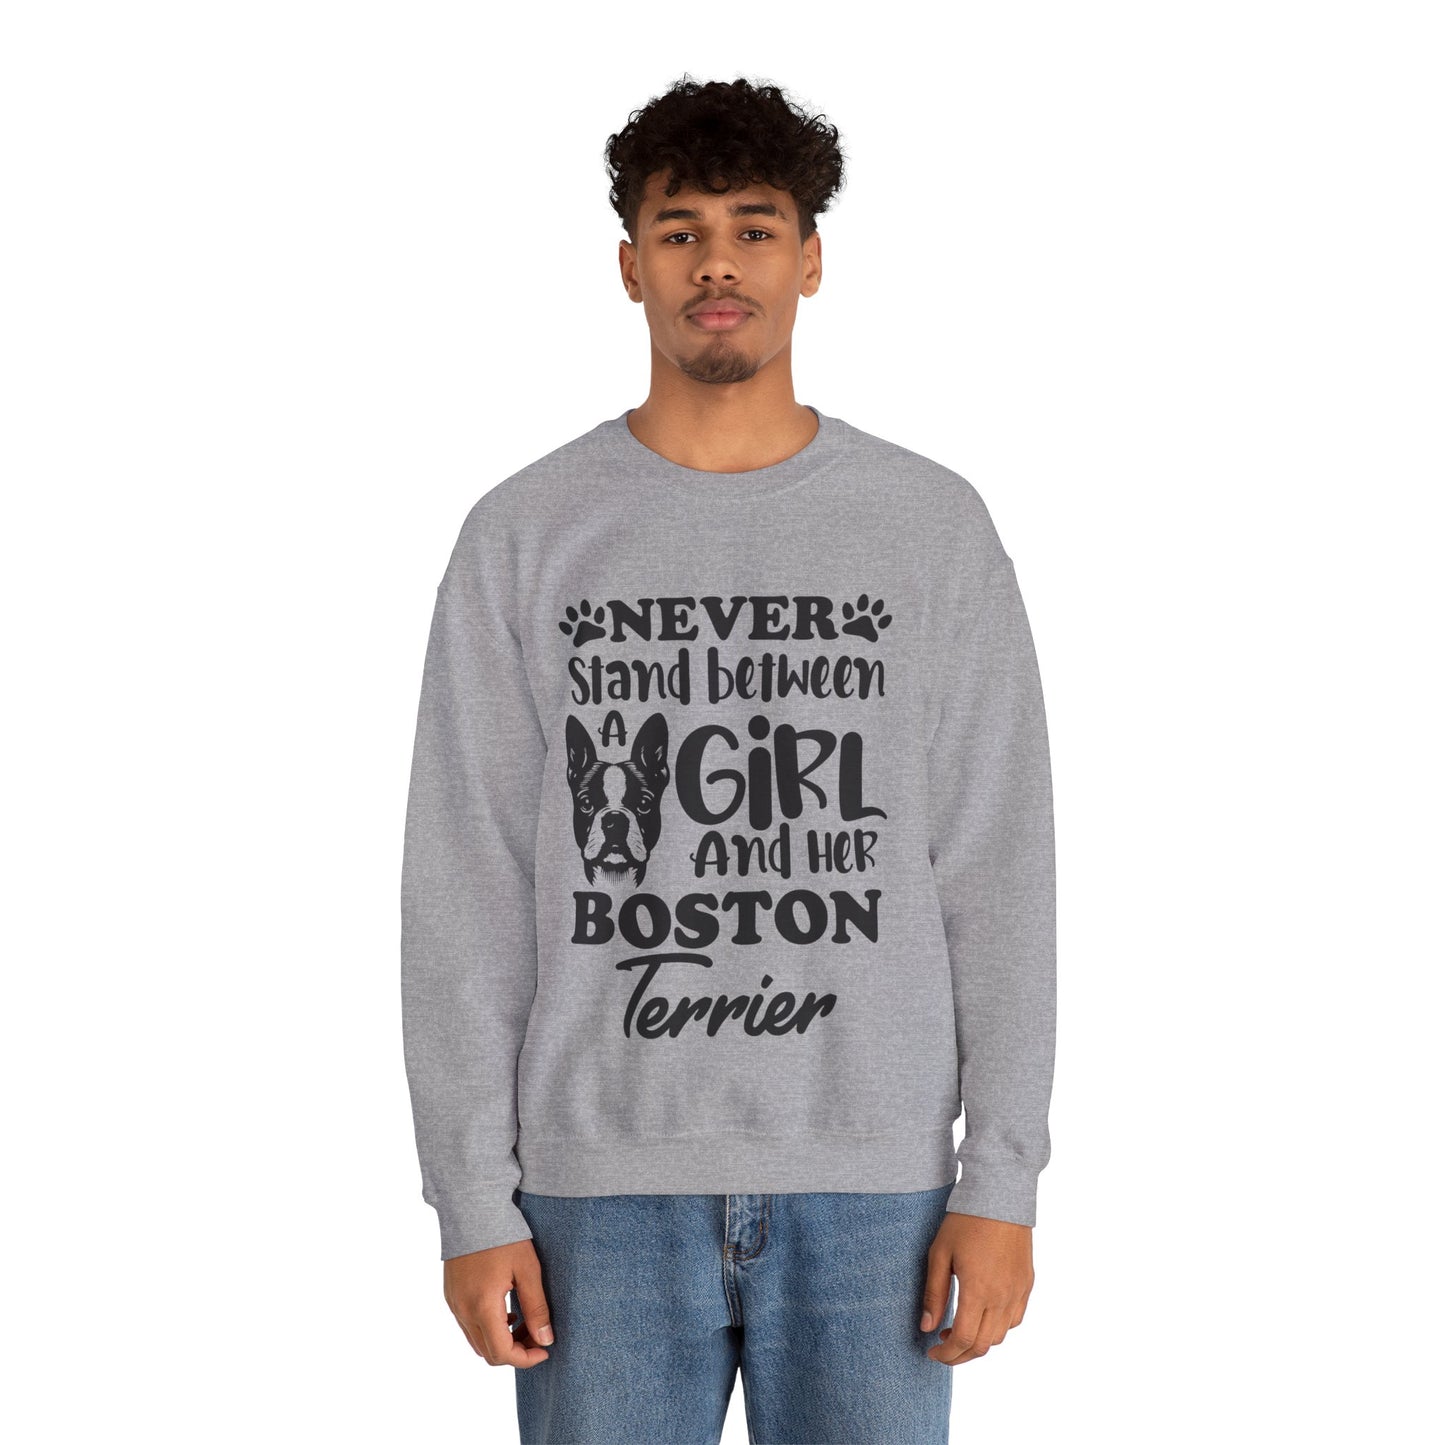 Dasher  - Unisex Sweatshirt for Boston Terrier lovers